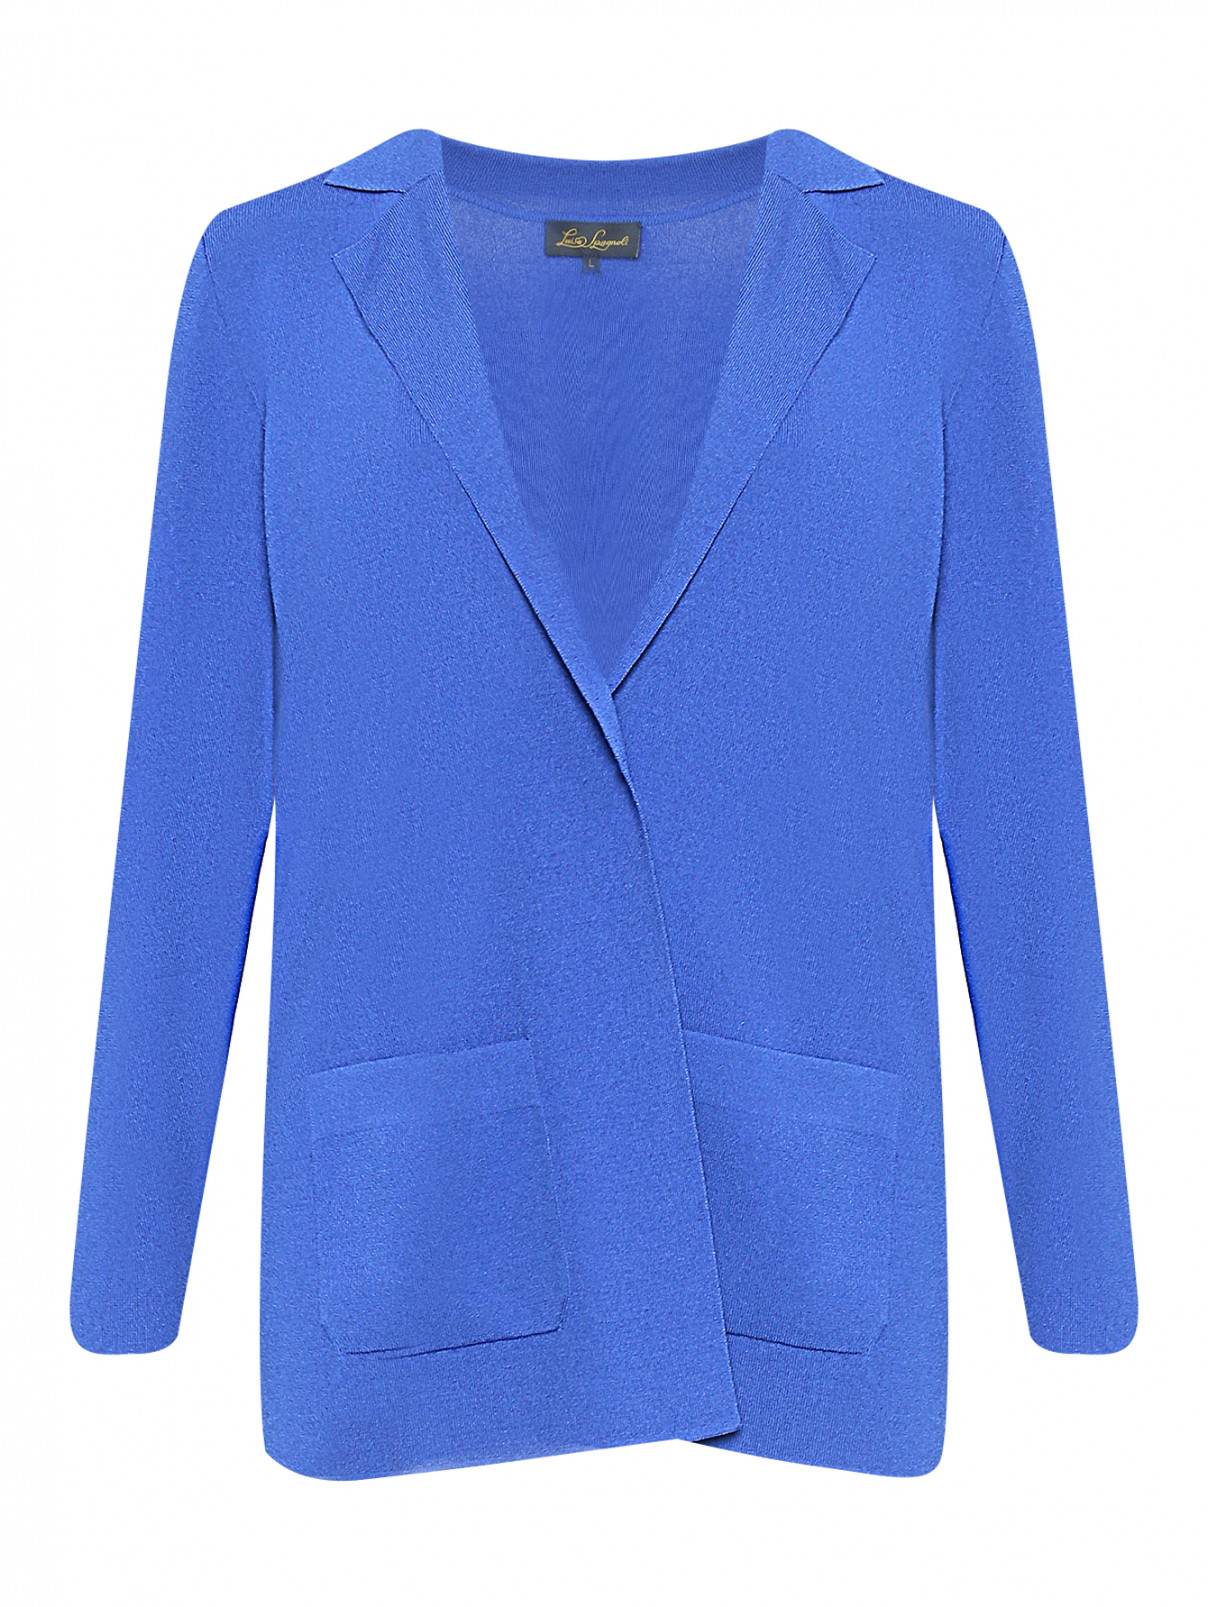 Кардиган свободного кроя с карманами Luisa Spagnoli  –  Общий вид  – Цвет:  Синий